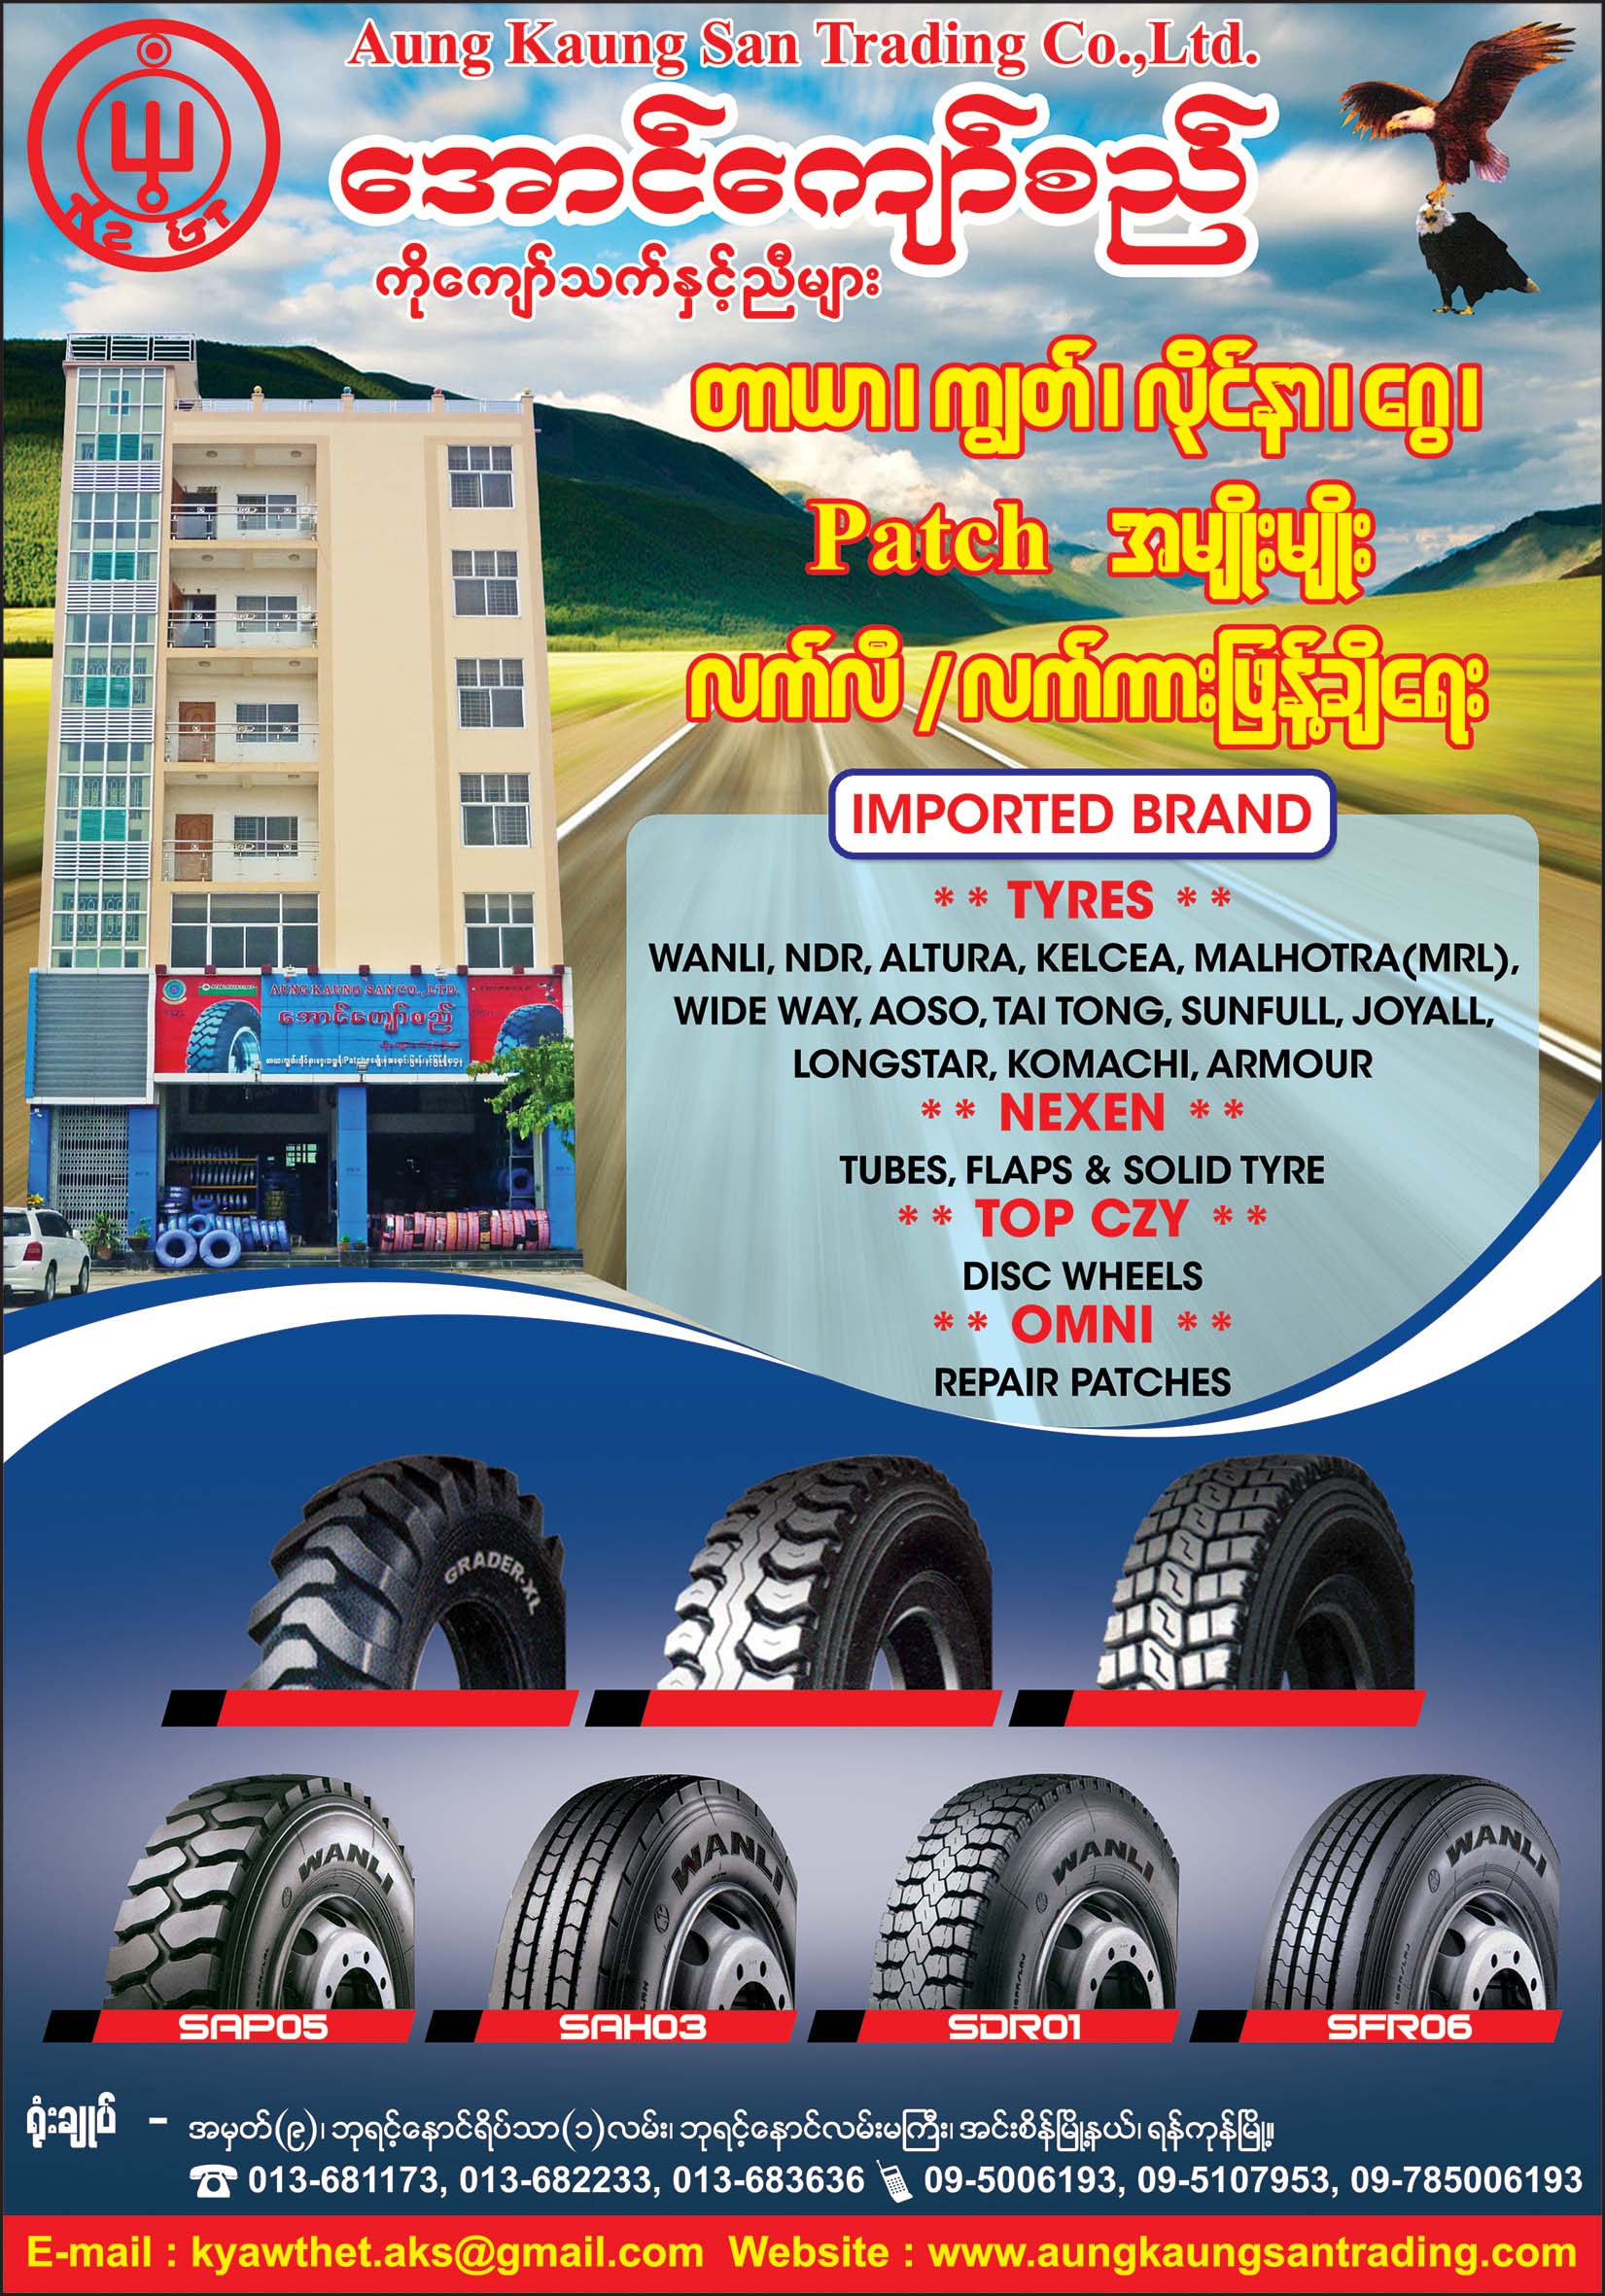 Aung Kyaw Si (Aung Kaung San Trading Co., Ltd.)